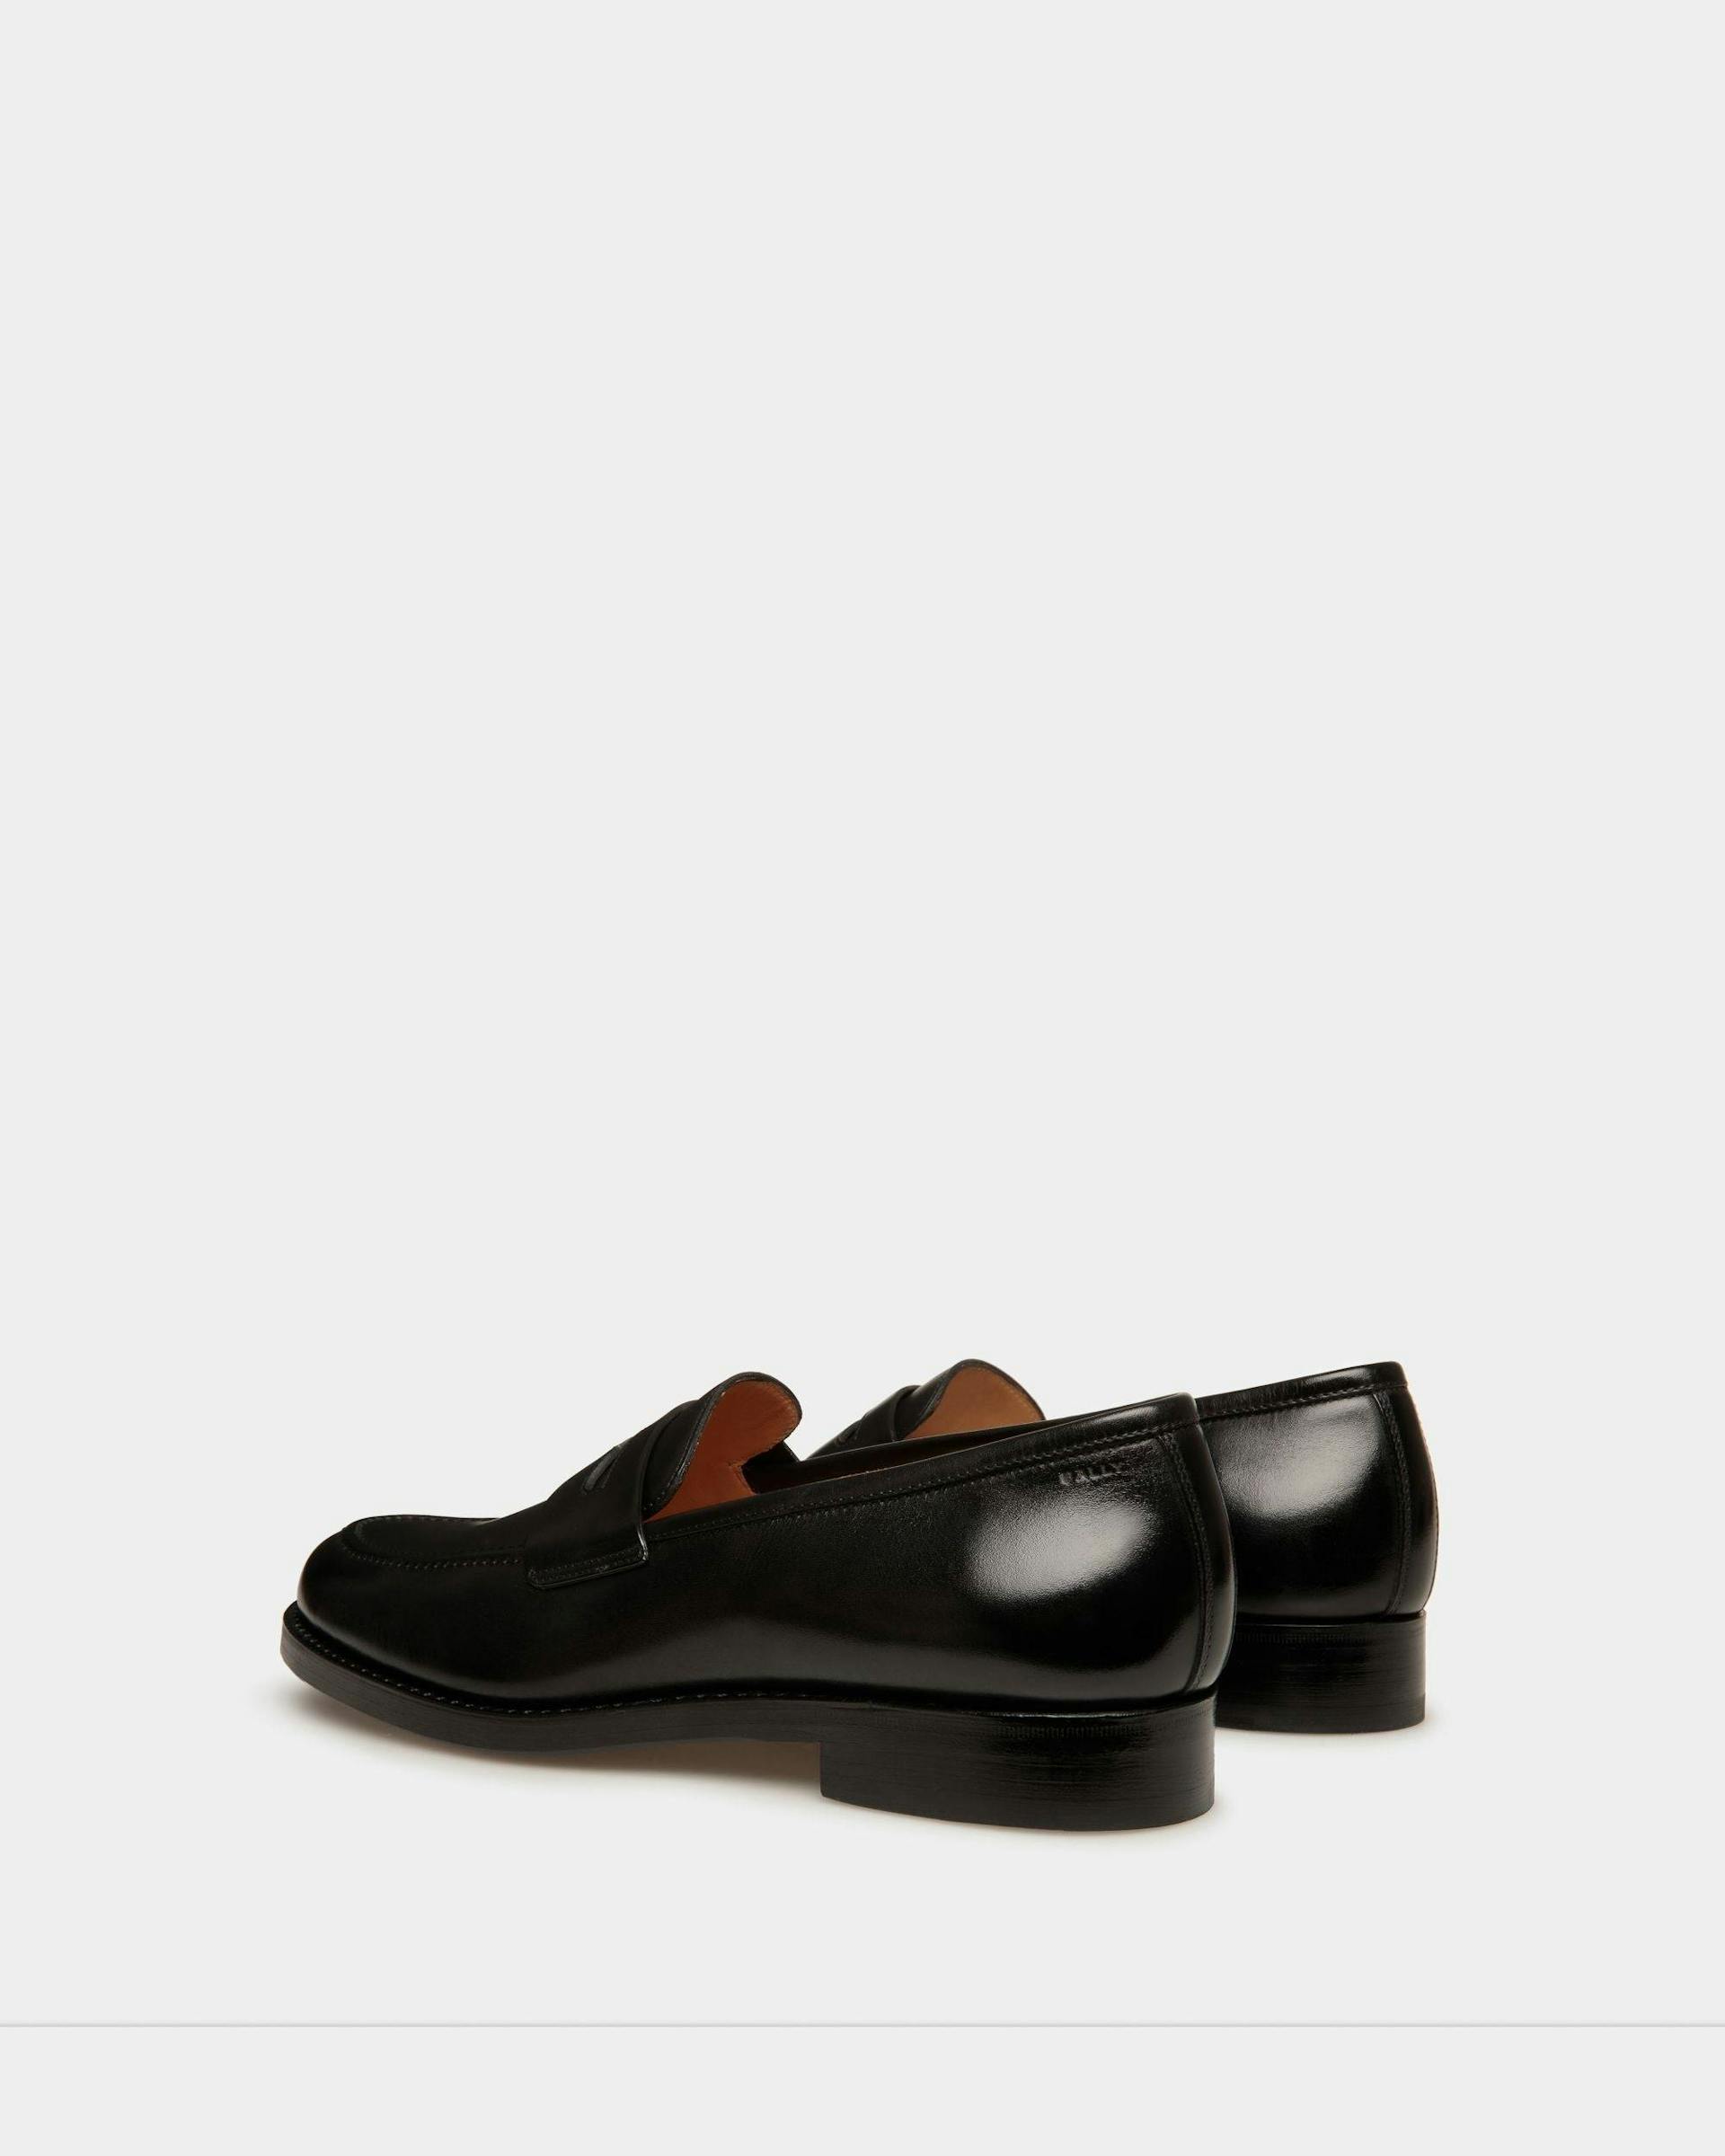 Men's Schoenen Loafer In Black Leather | Bally | Still Life 3/4 Back